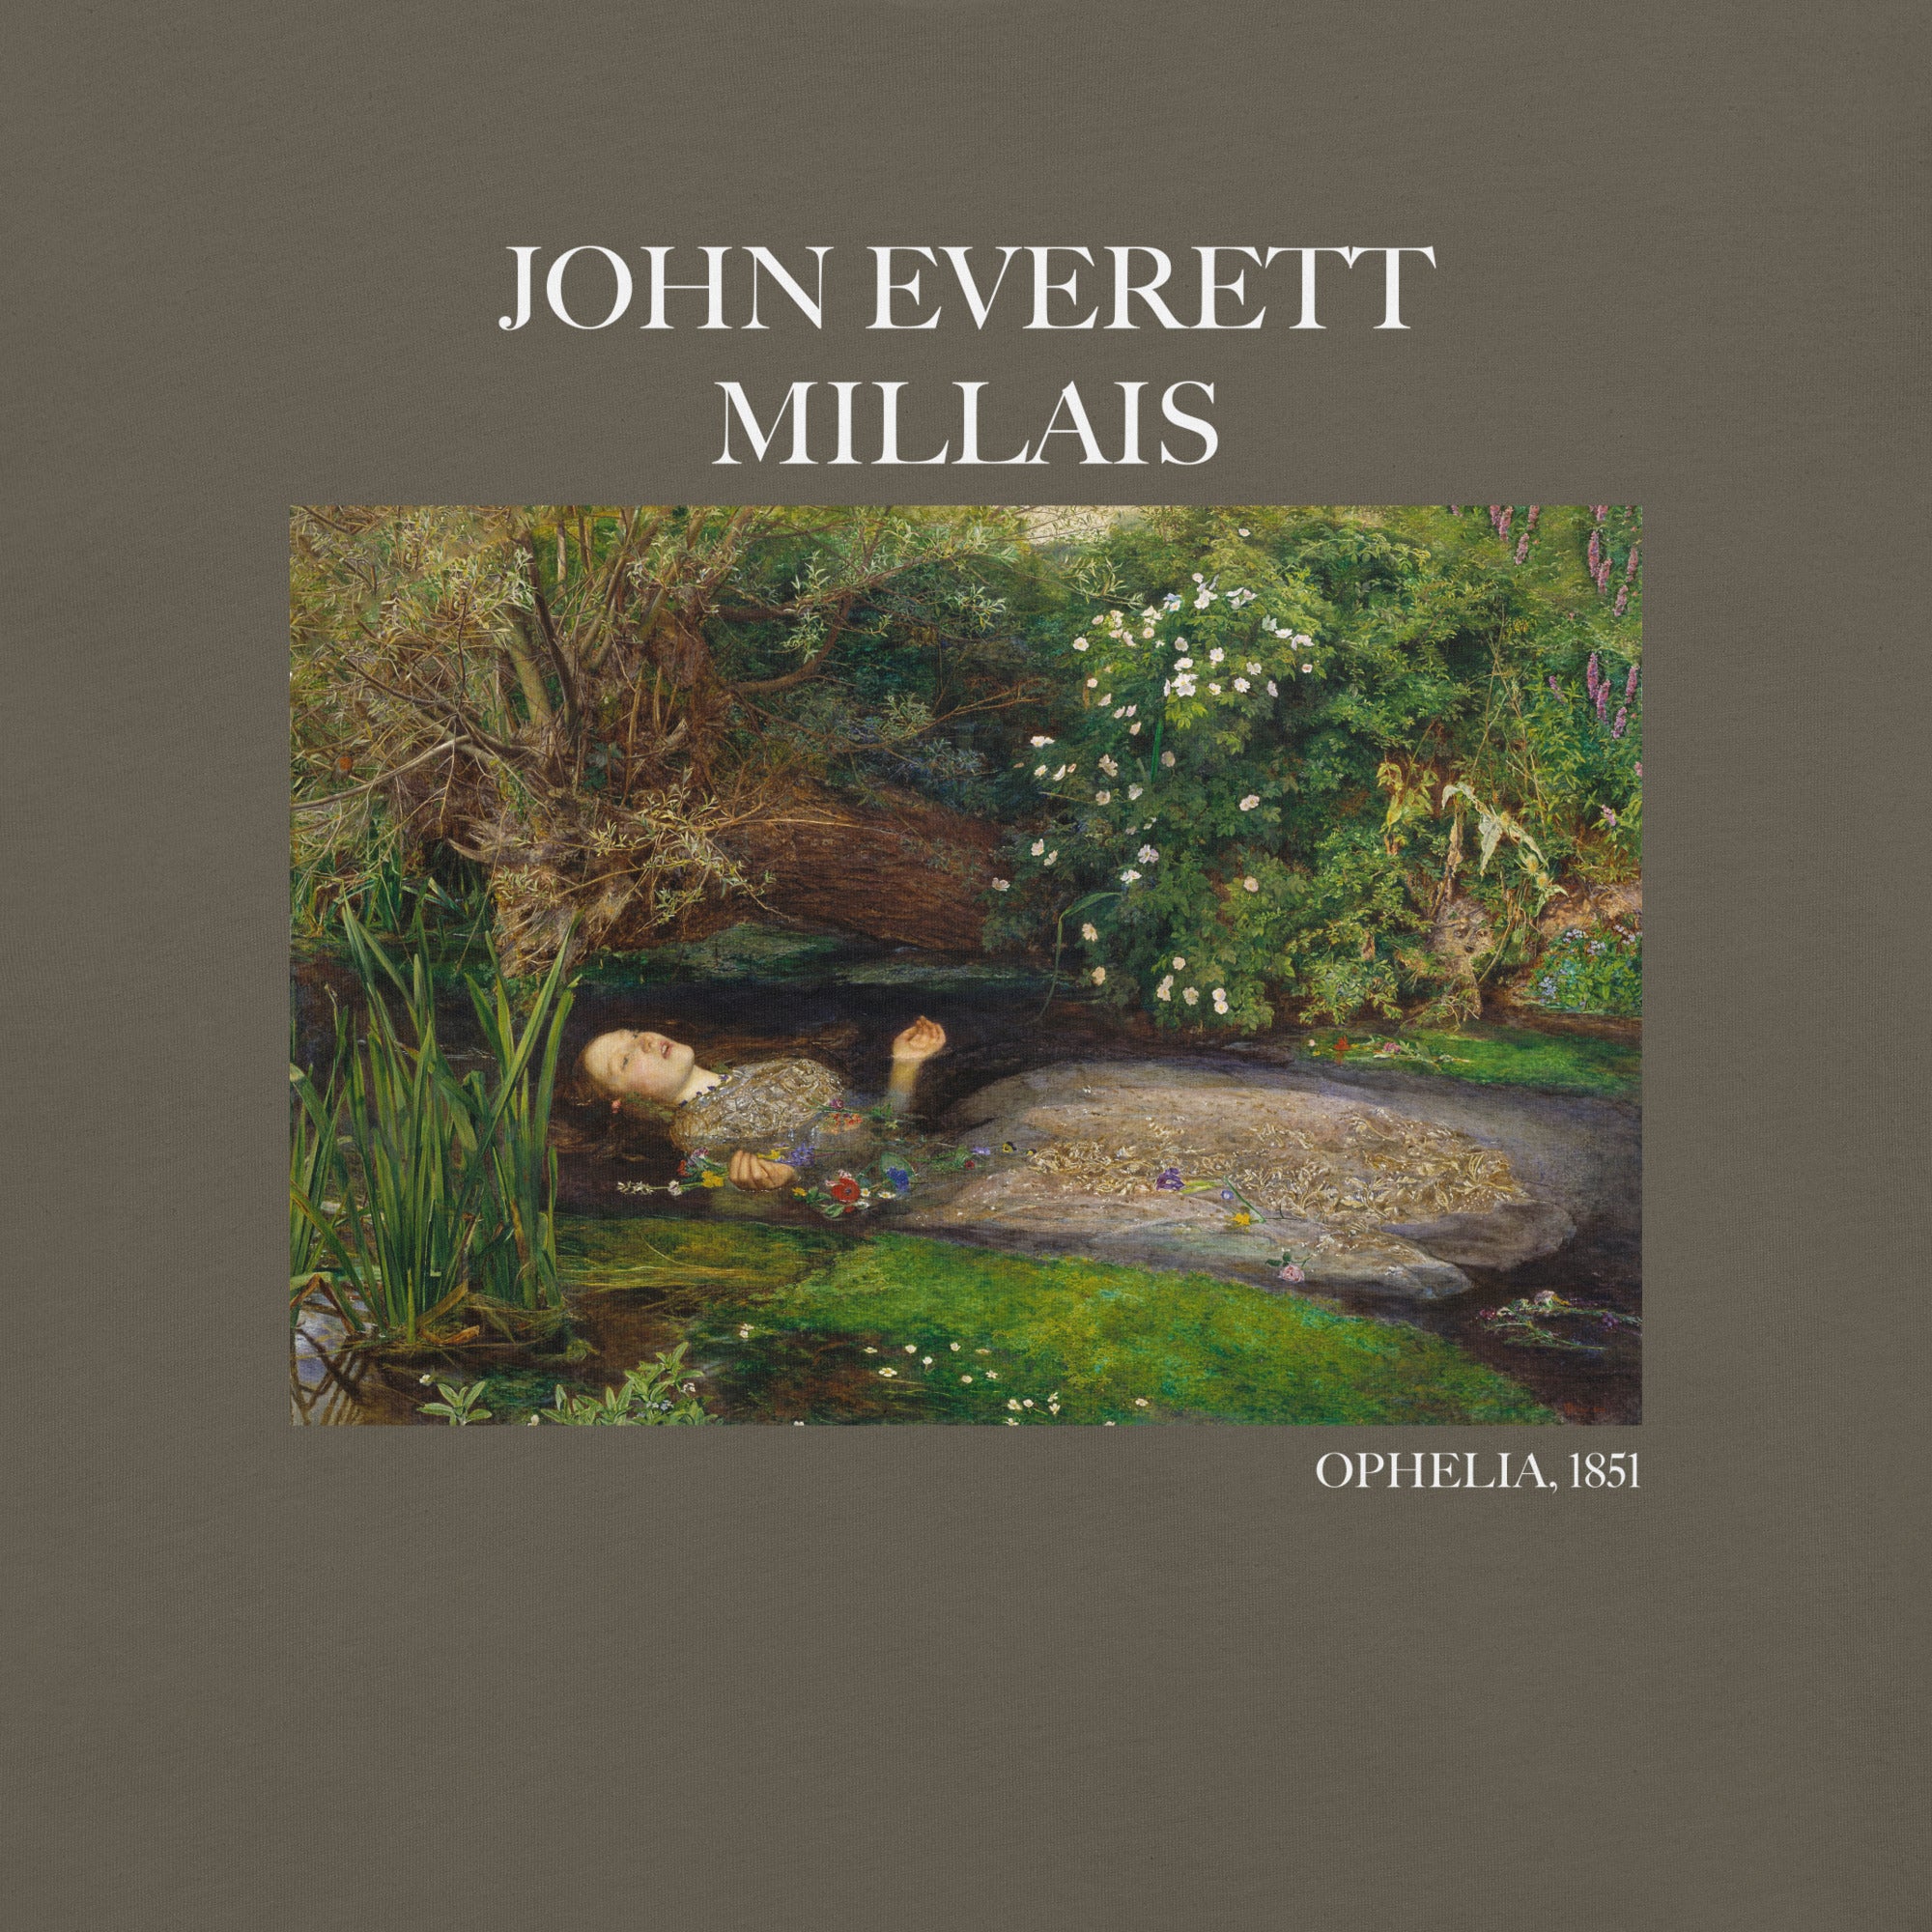 John Everett Millais 'Ophelia' Famous Painting T-Shirt | Unisex Classic Art Tee